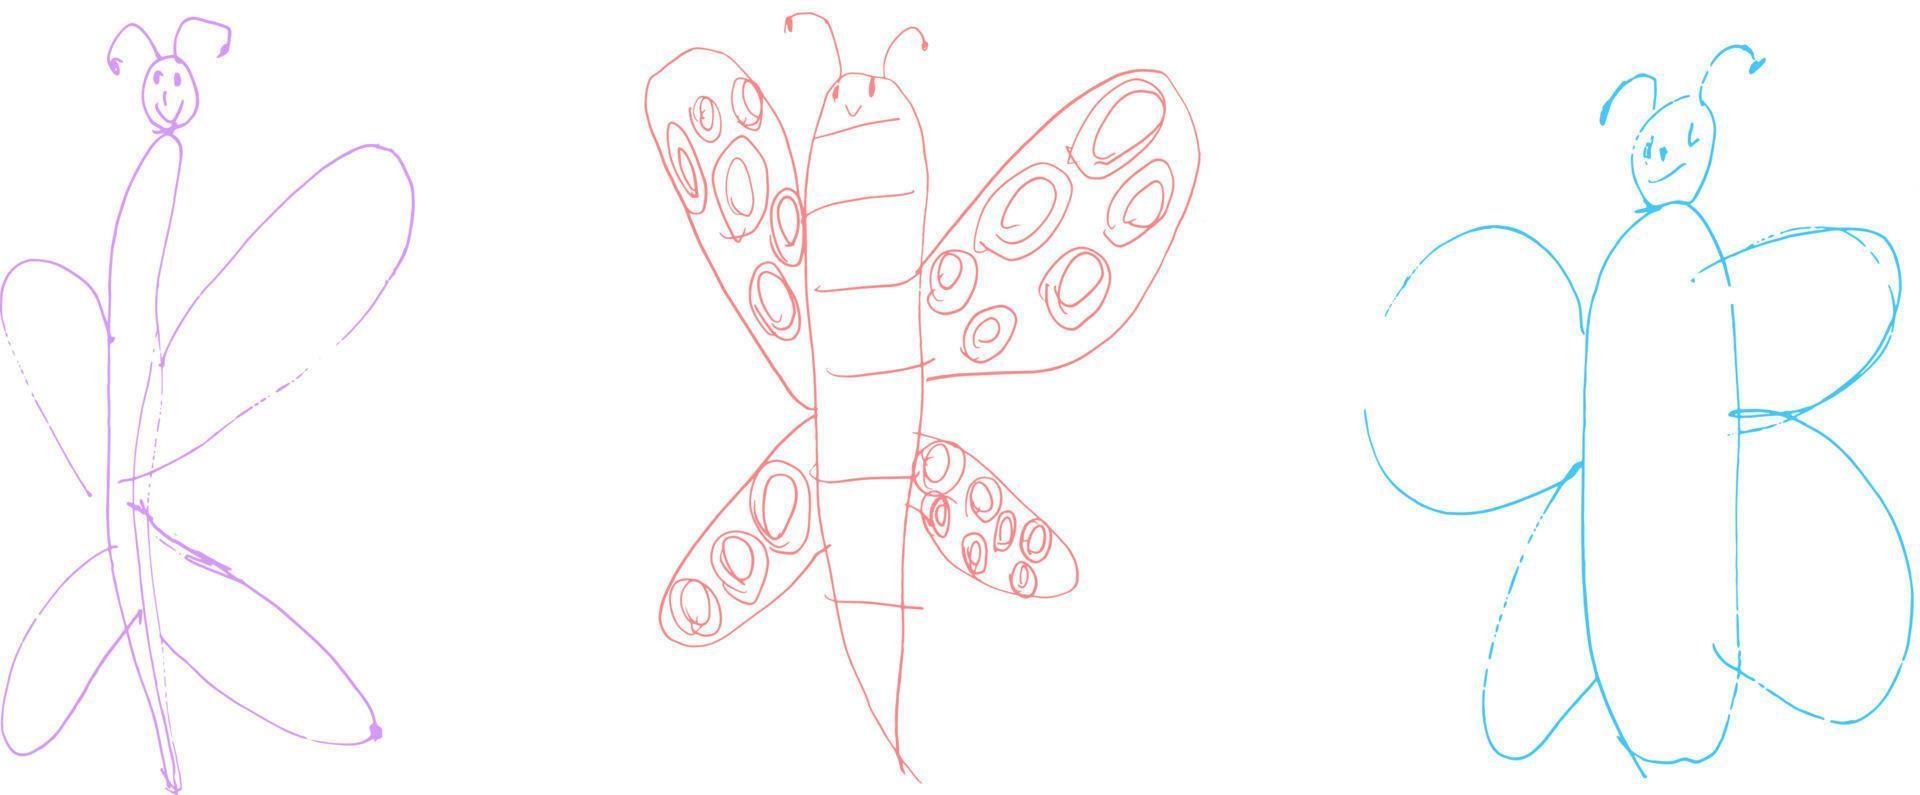 conjunto de dibujo infantil mariposas volar vector dibujo a mano